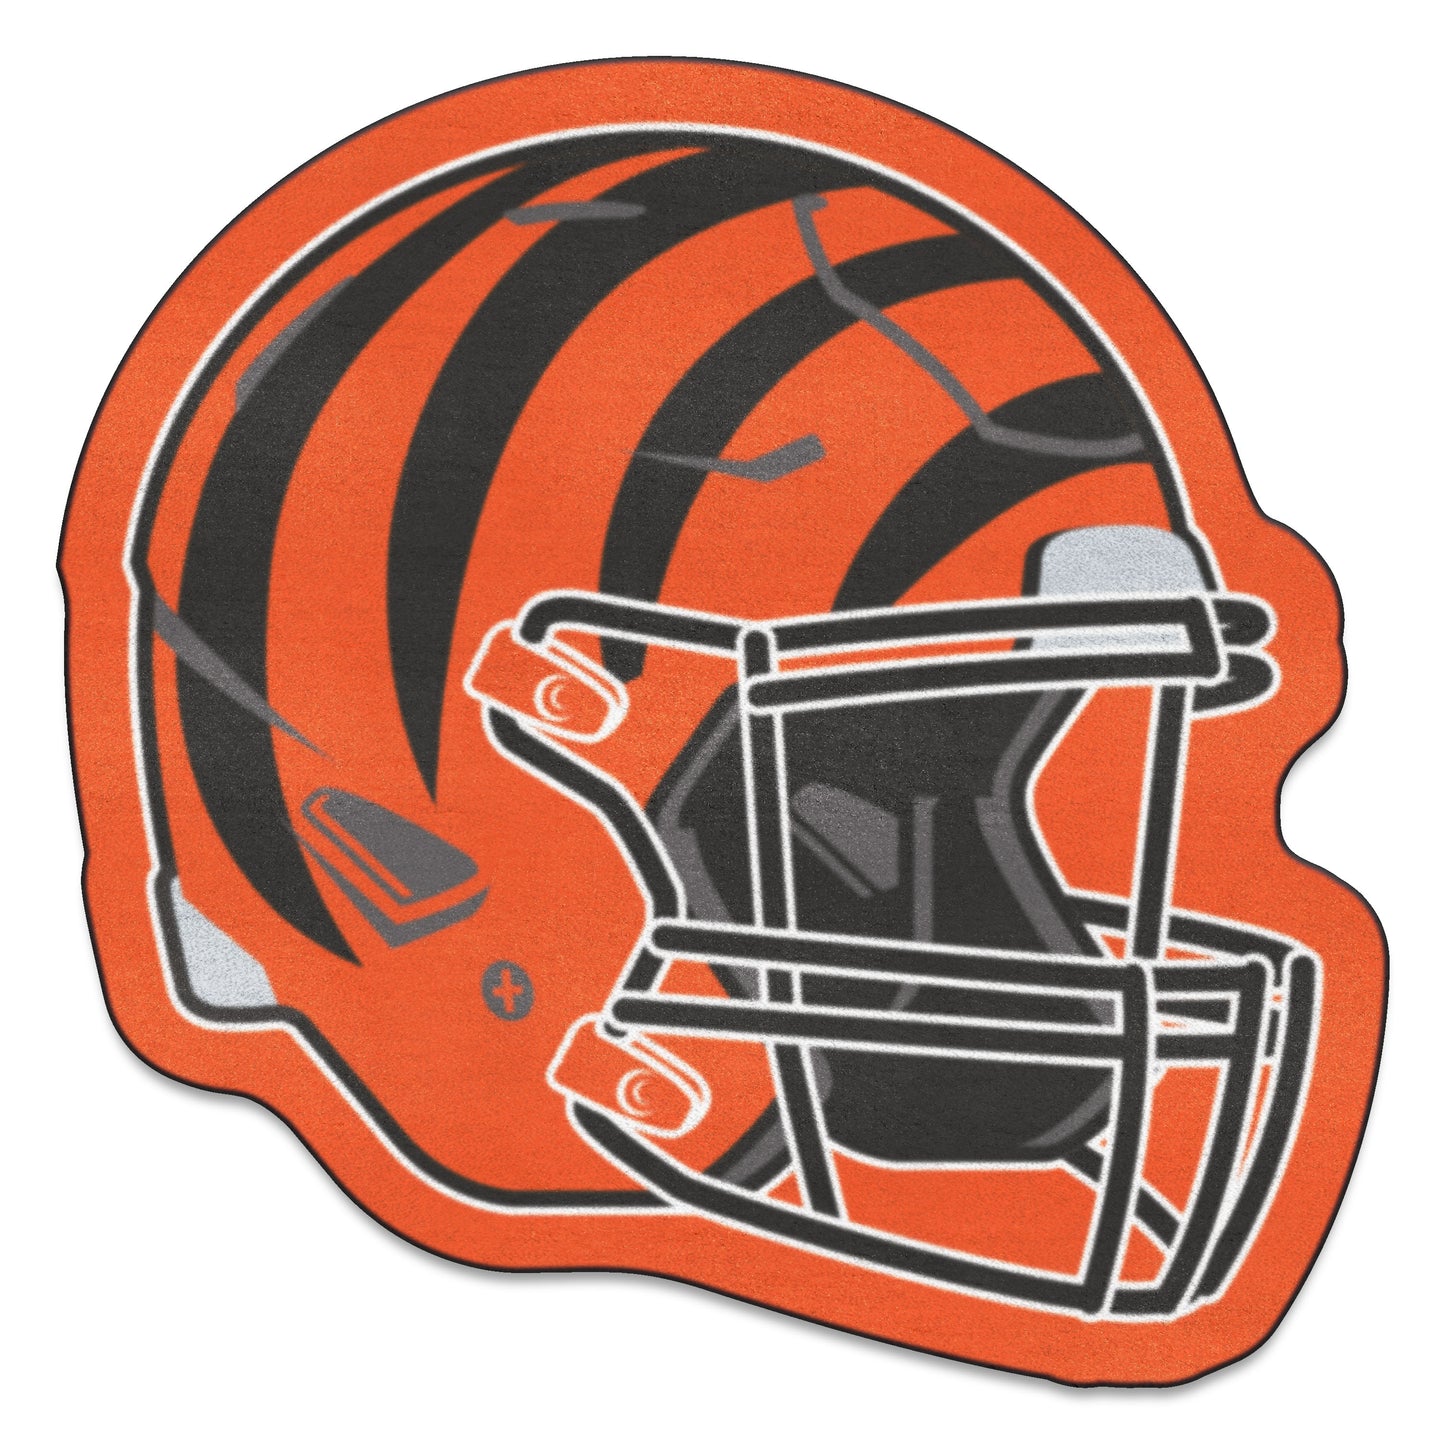 Cincinnati Bengals Mascot Helmet Rug